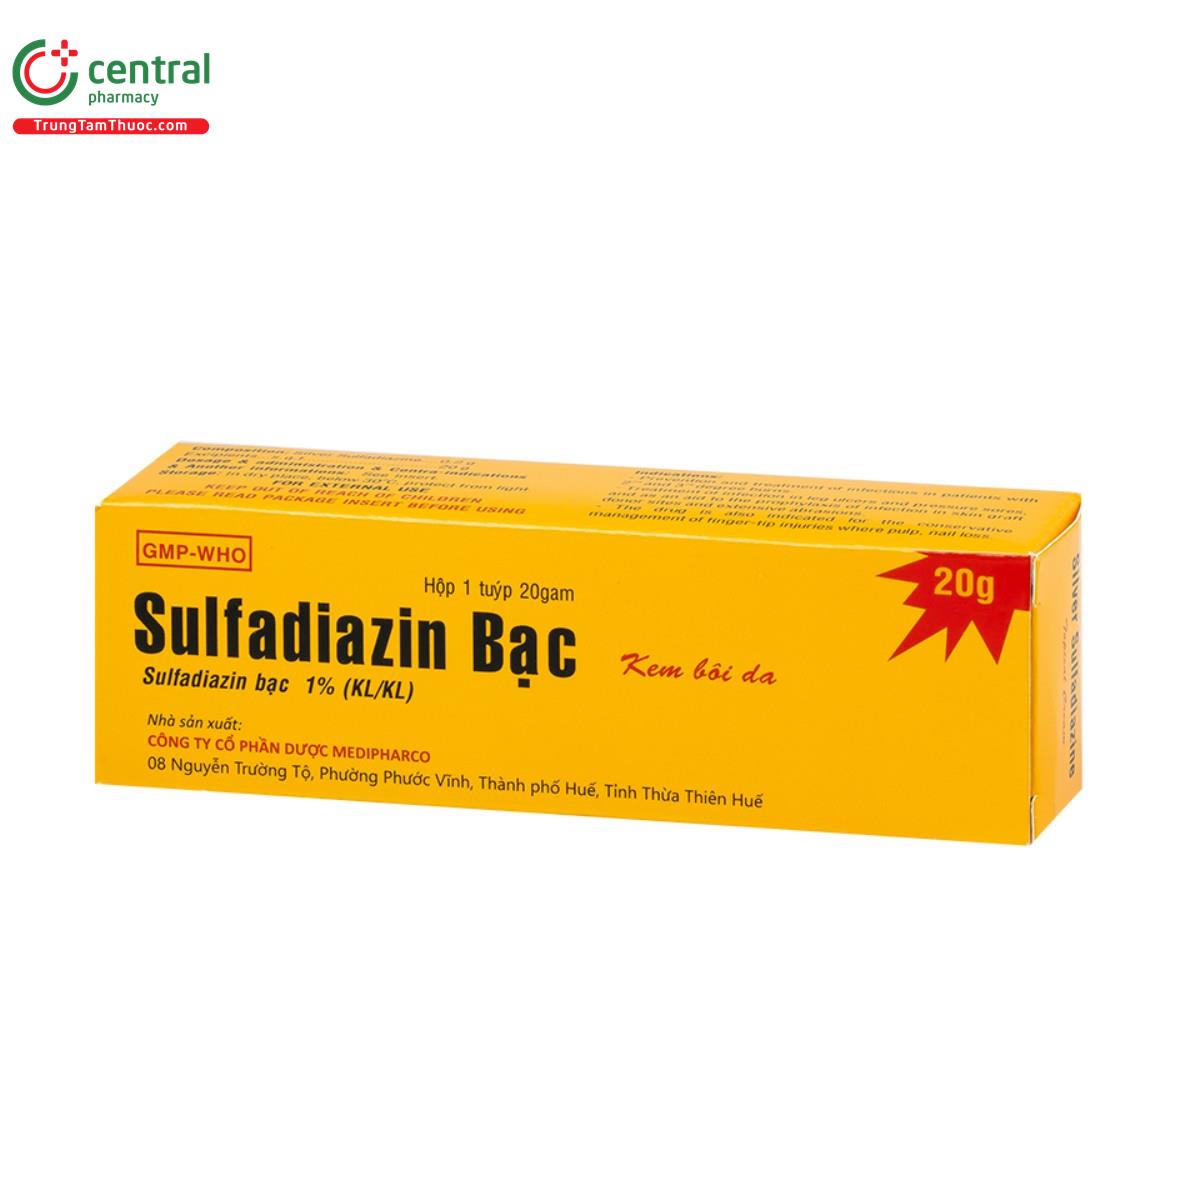 sulfadiazin bac medipharco 2 Q6802